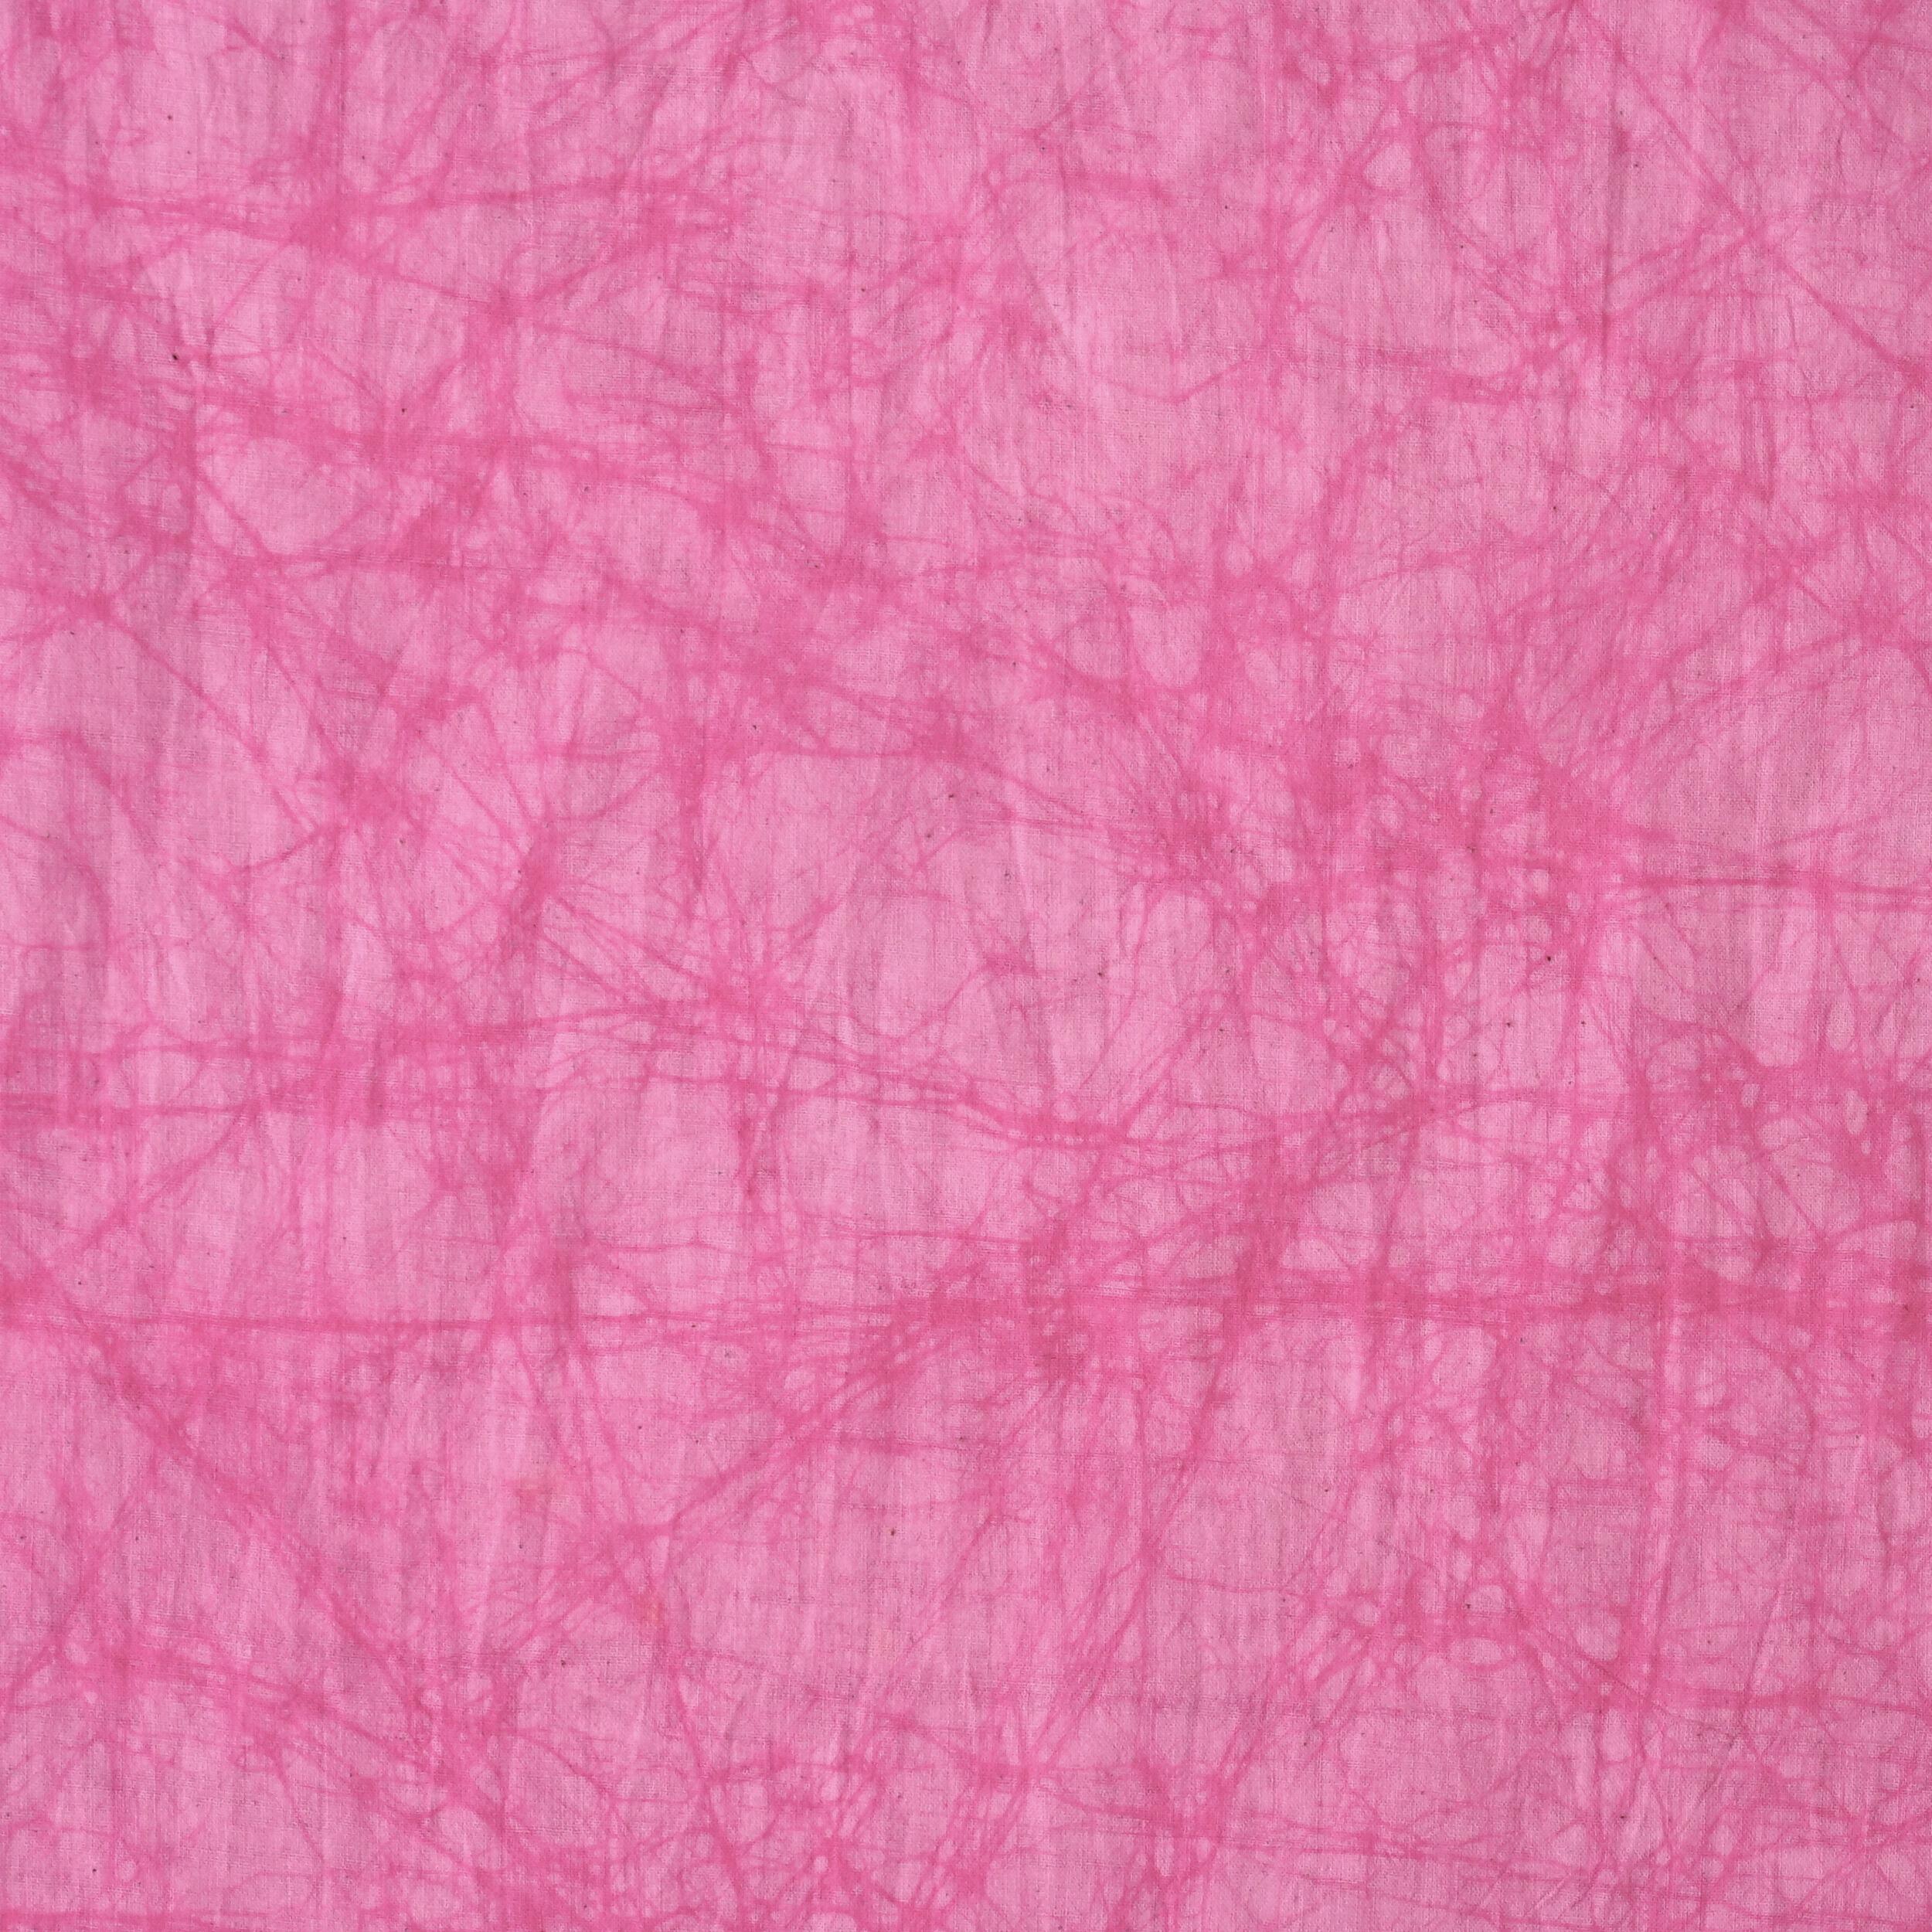 100% Block-Printed Batik Cotton Fabric From India - Batik - Pink Red Litho - Flat